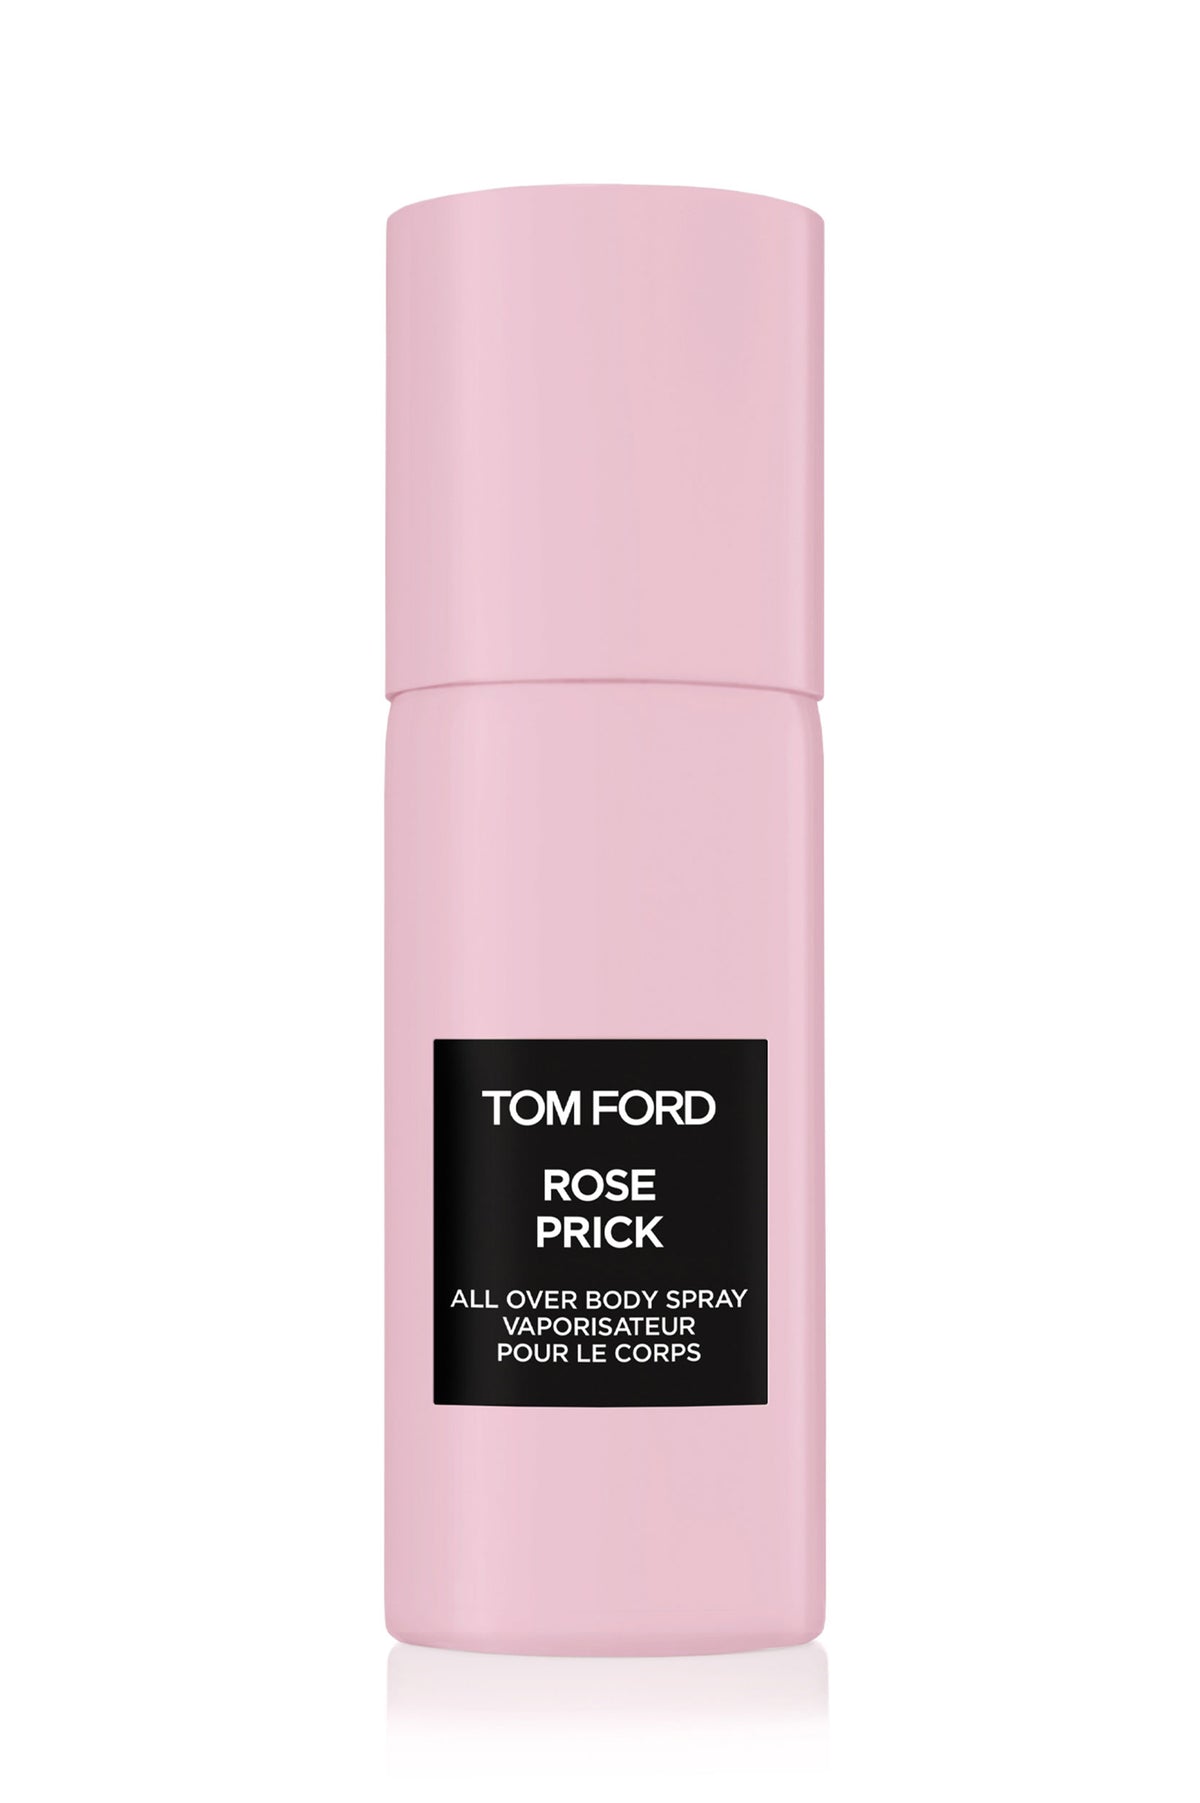 Tomford (rose prick body spray)